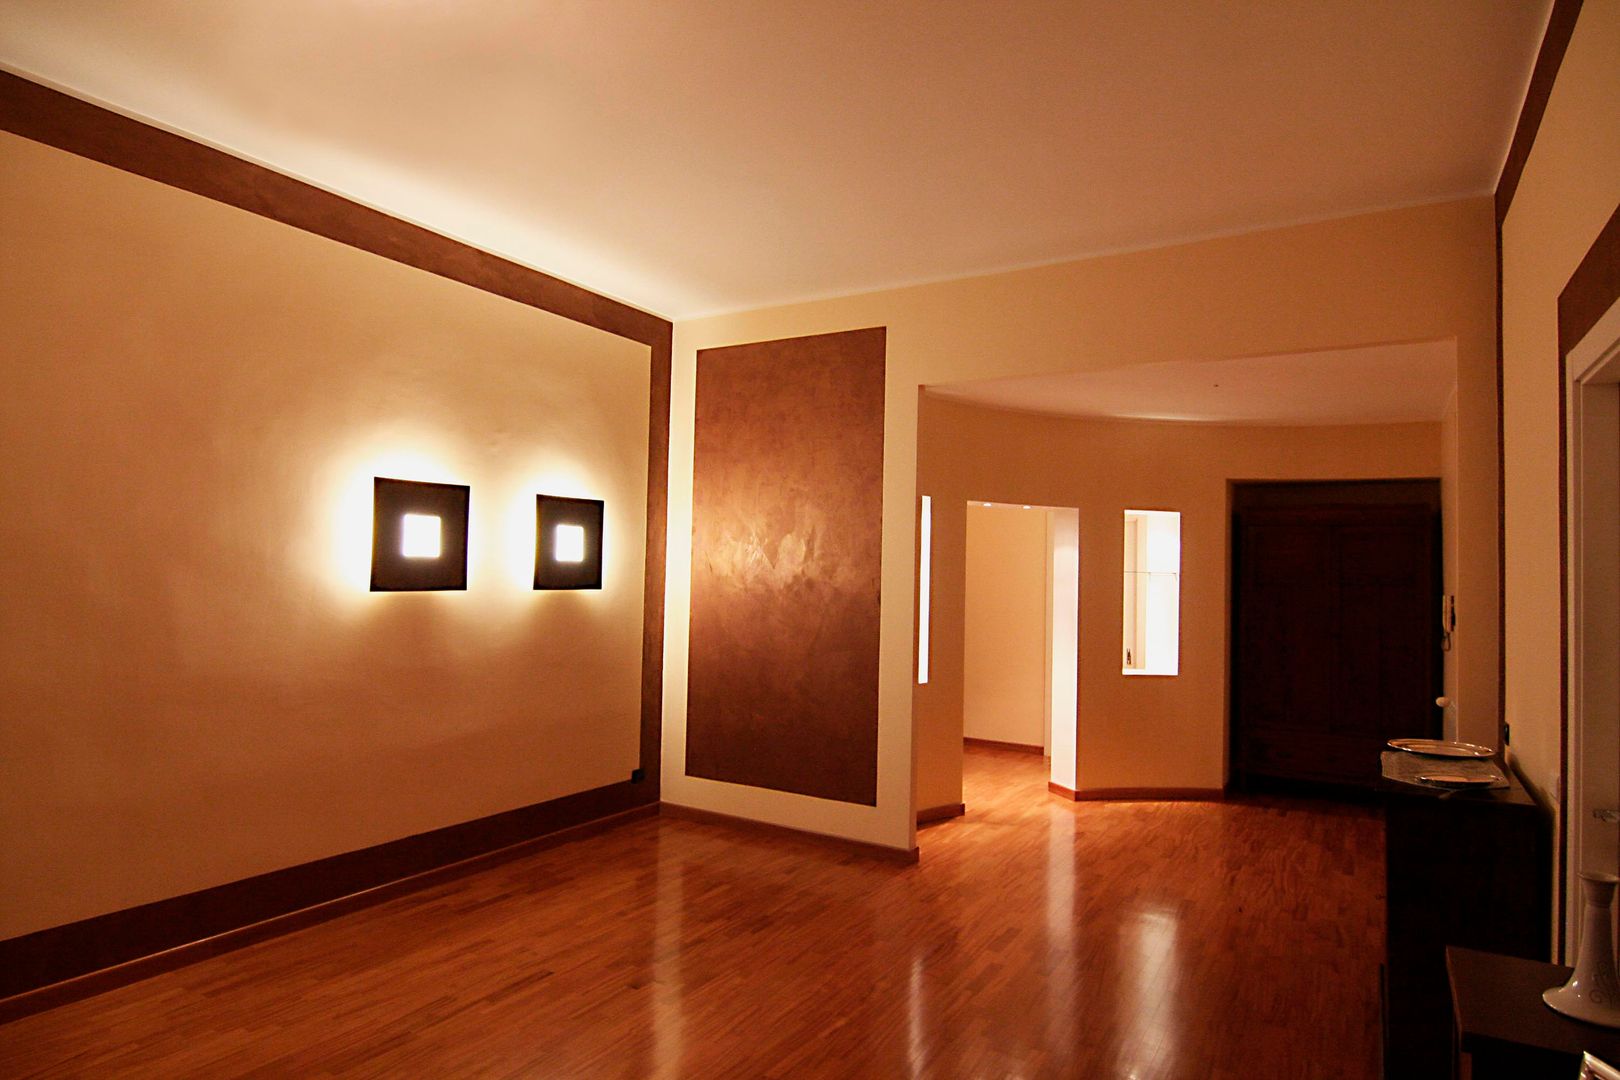 Maison "S", Marco Maria Statella - Architect Marco Maria Statella - Architect Living room